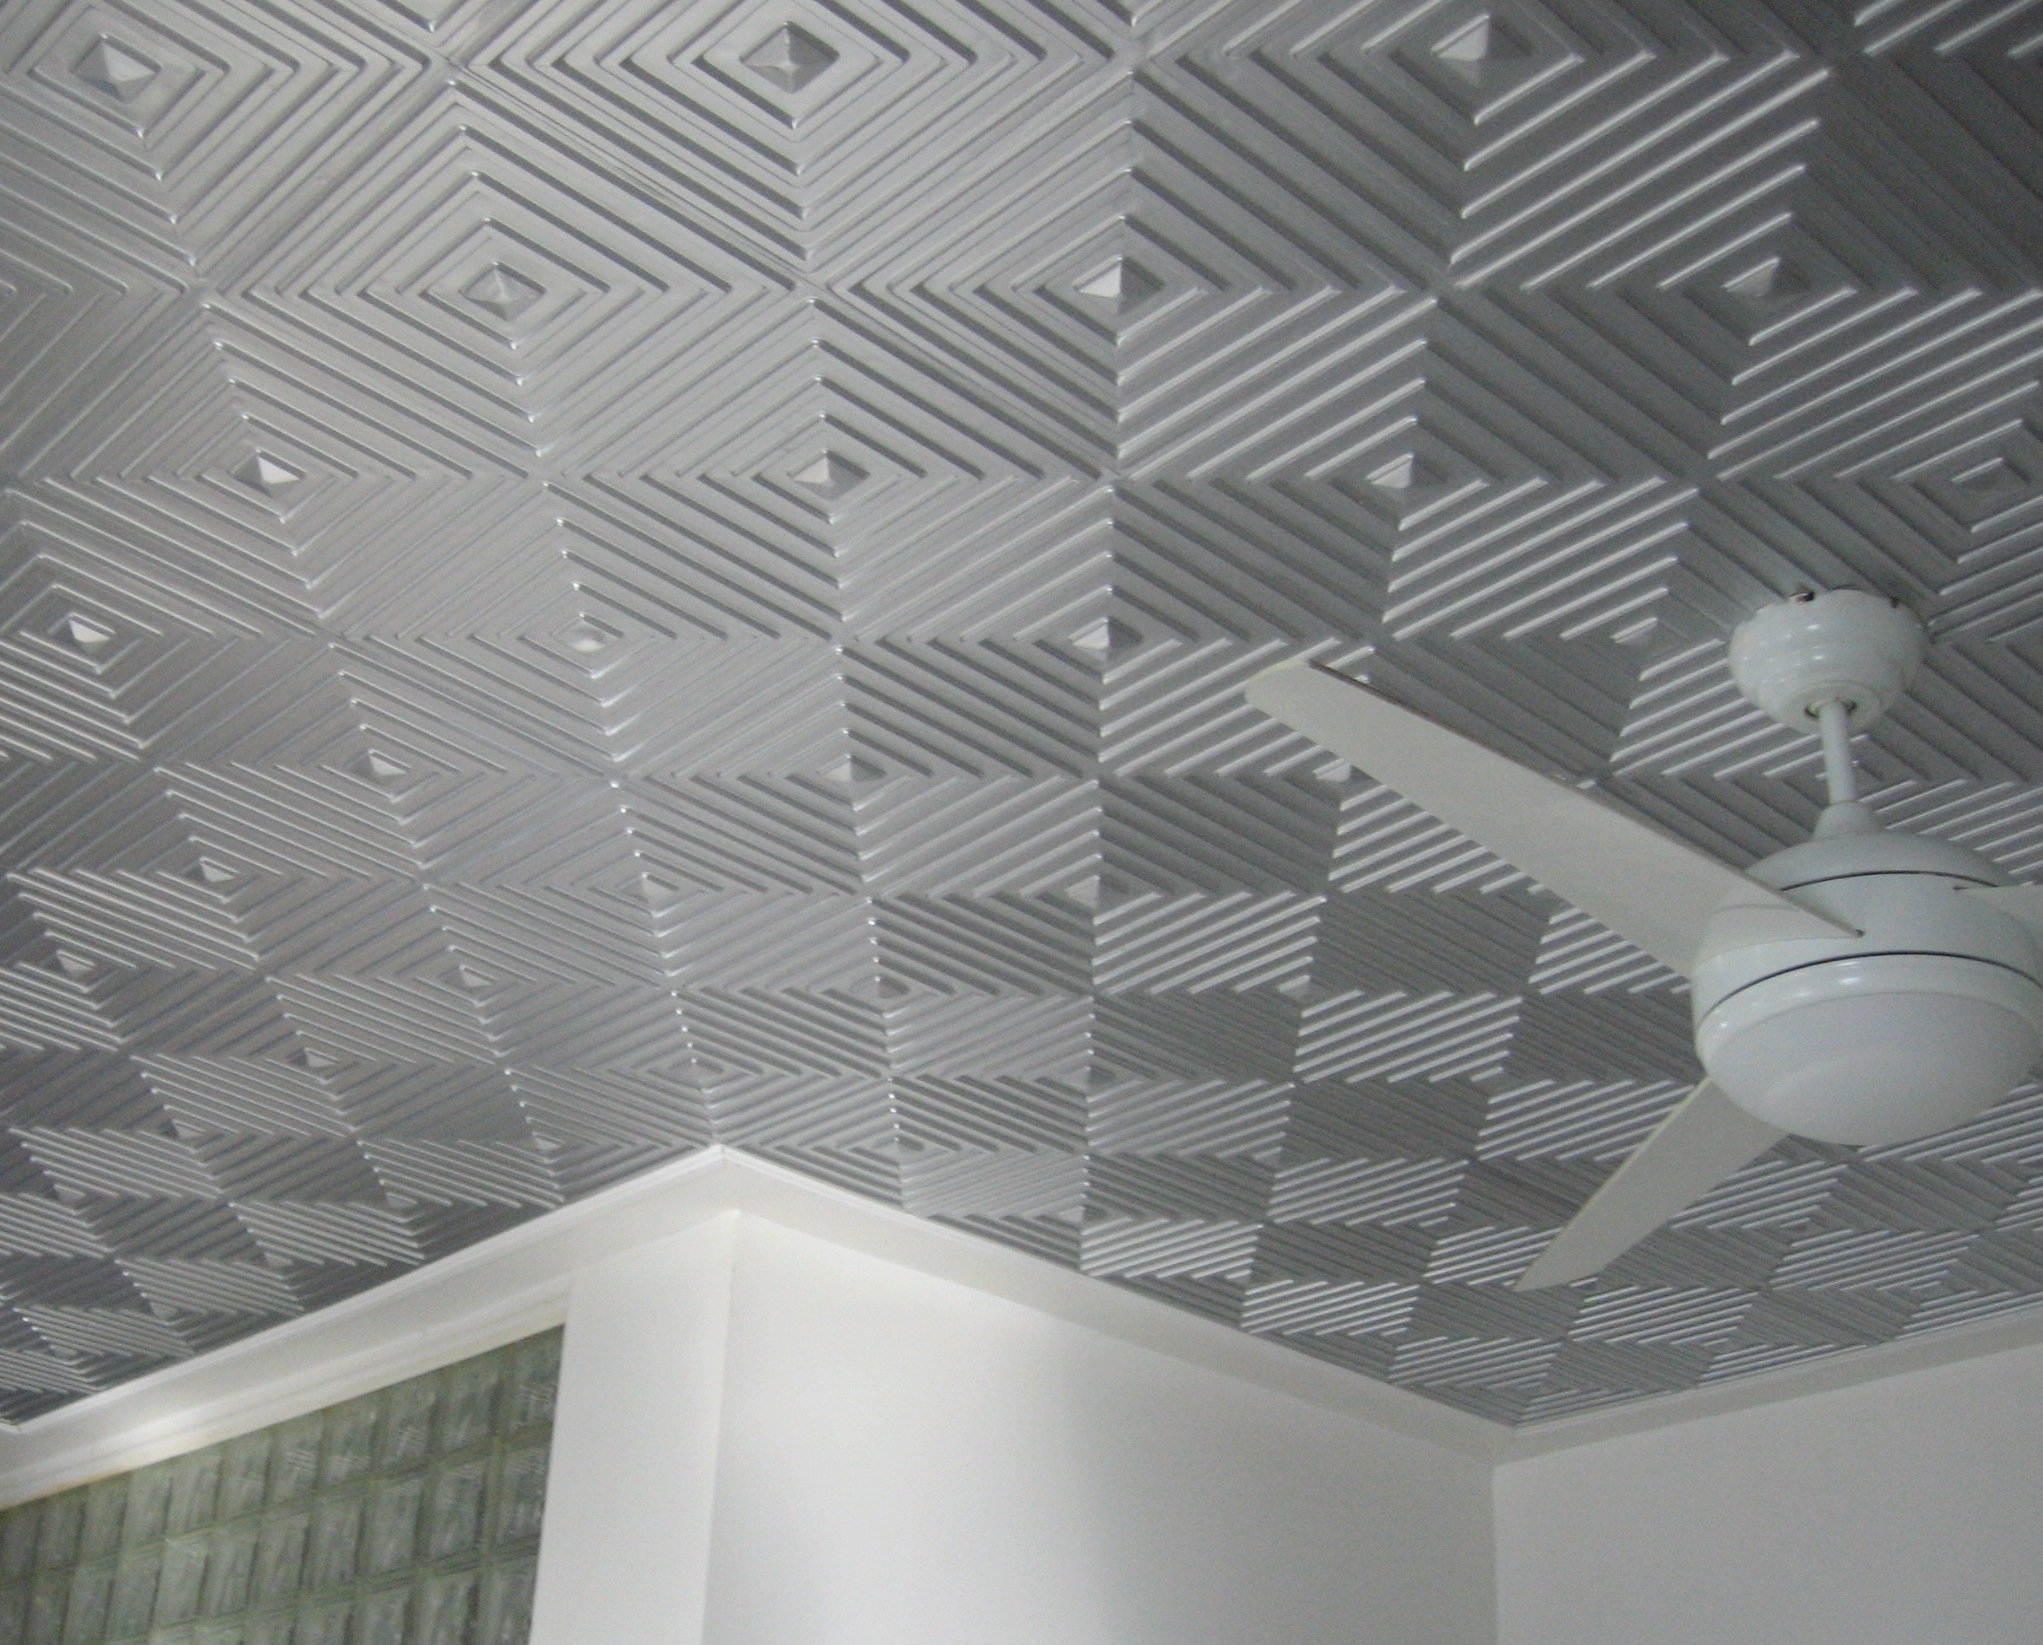 Ceiling Tile Acoustic Insulation Ceiling Tile Acoustic Insulation ceiling acoustic drop ceiling favorable acoustic drop ceiling 2043 X 1645